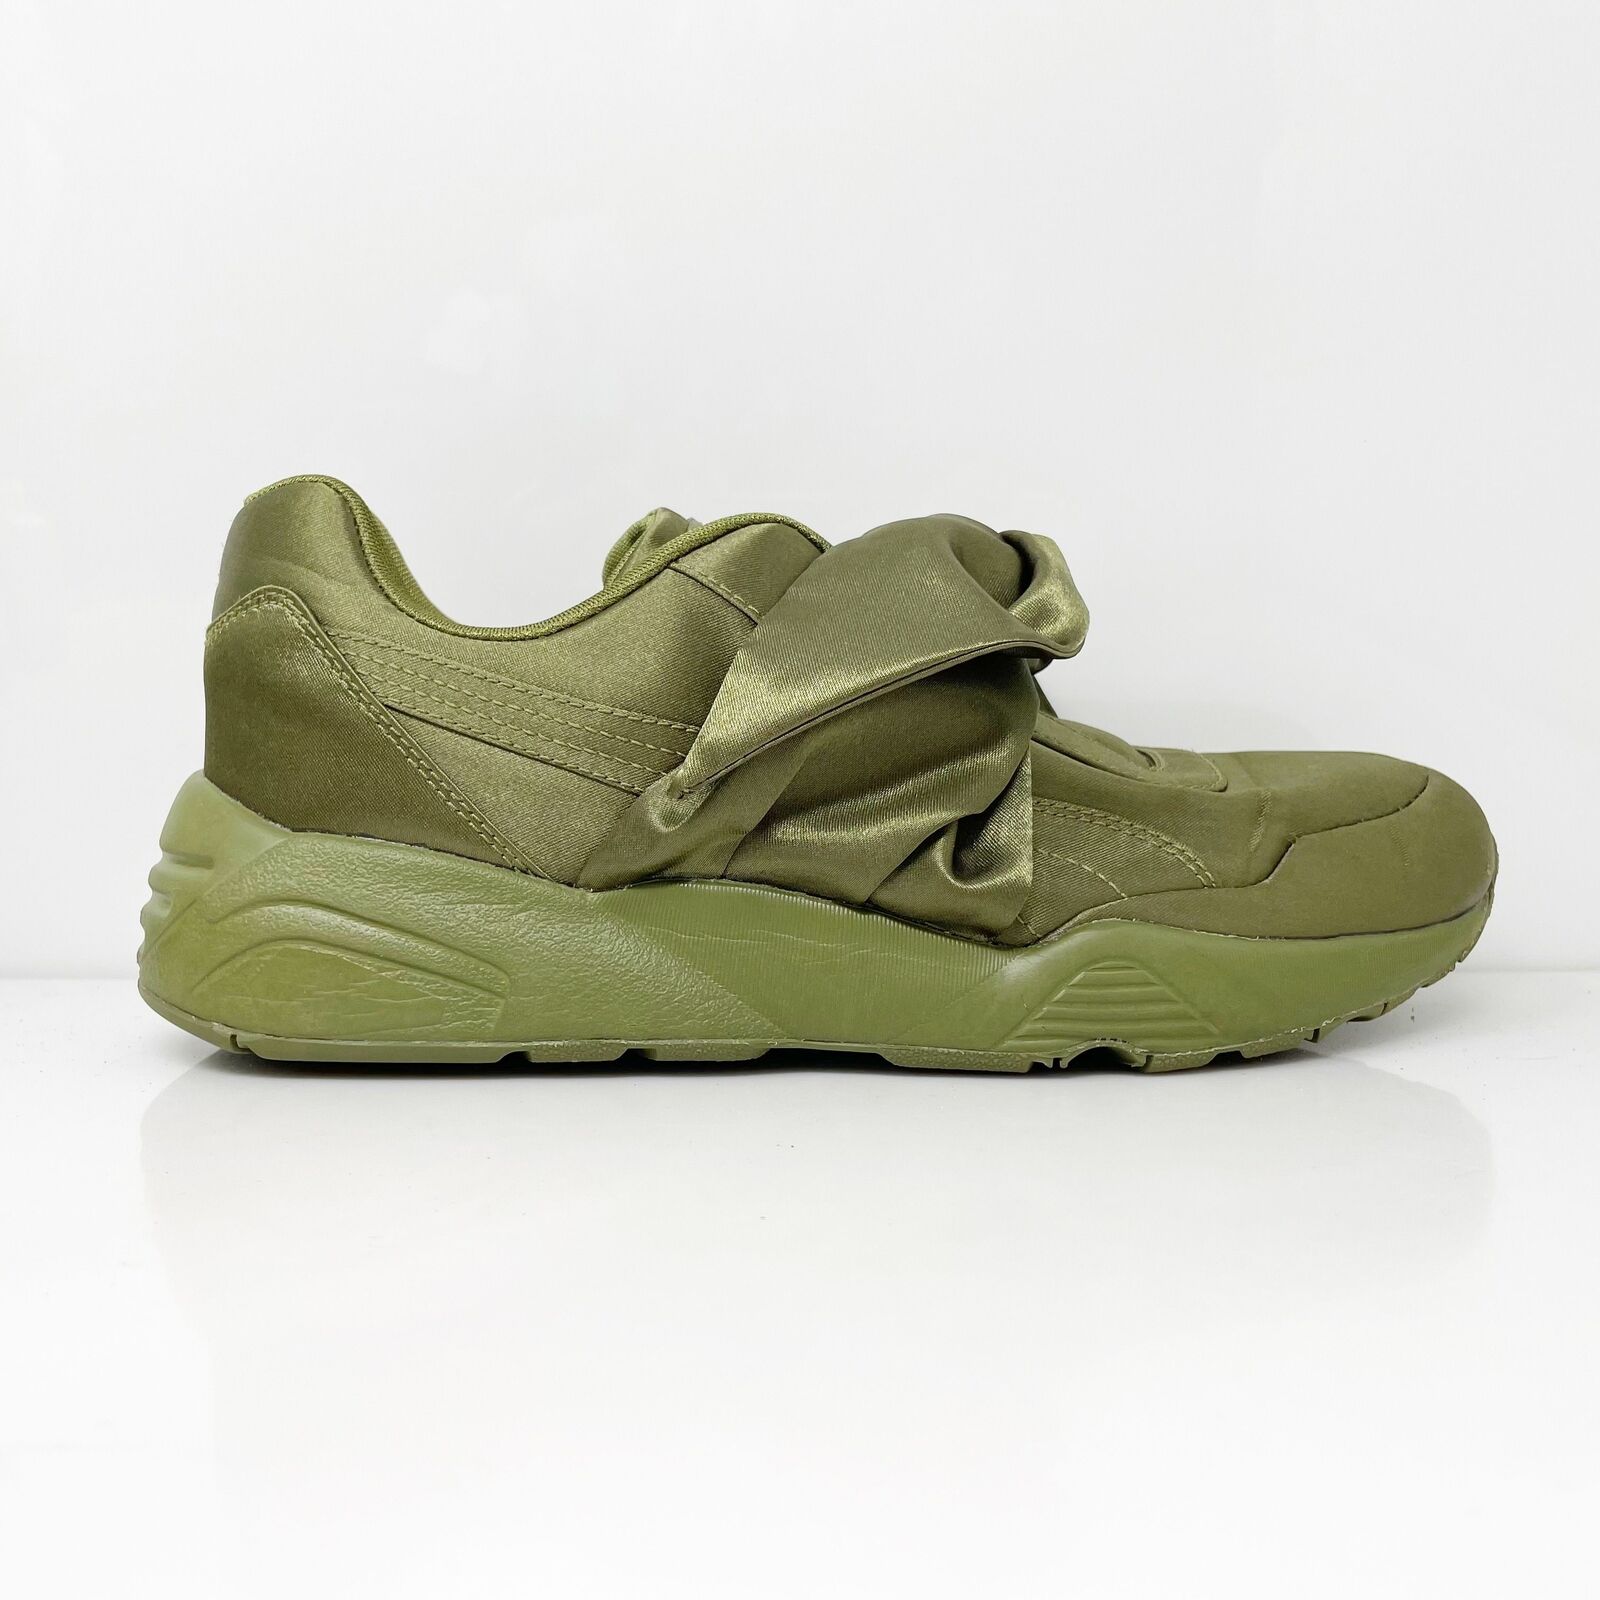 Puma Womens Rihanna 365054 04 Green Casual Shoes Sneakers Size 8.5